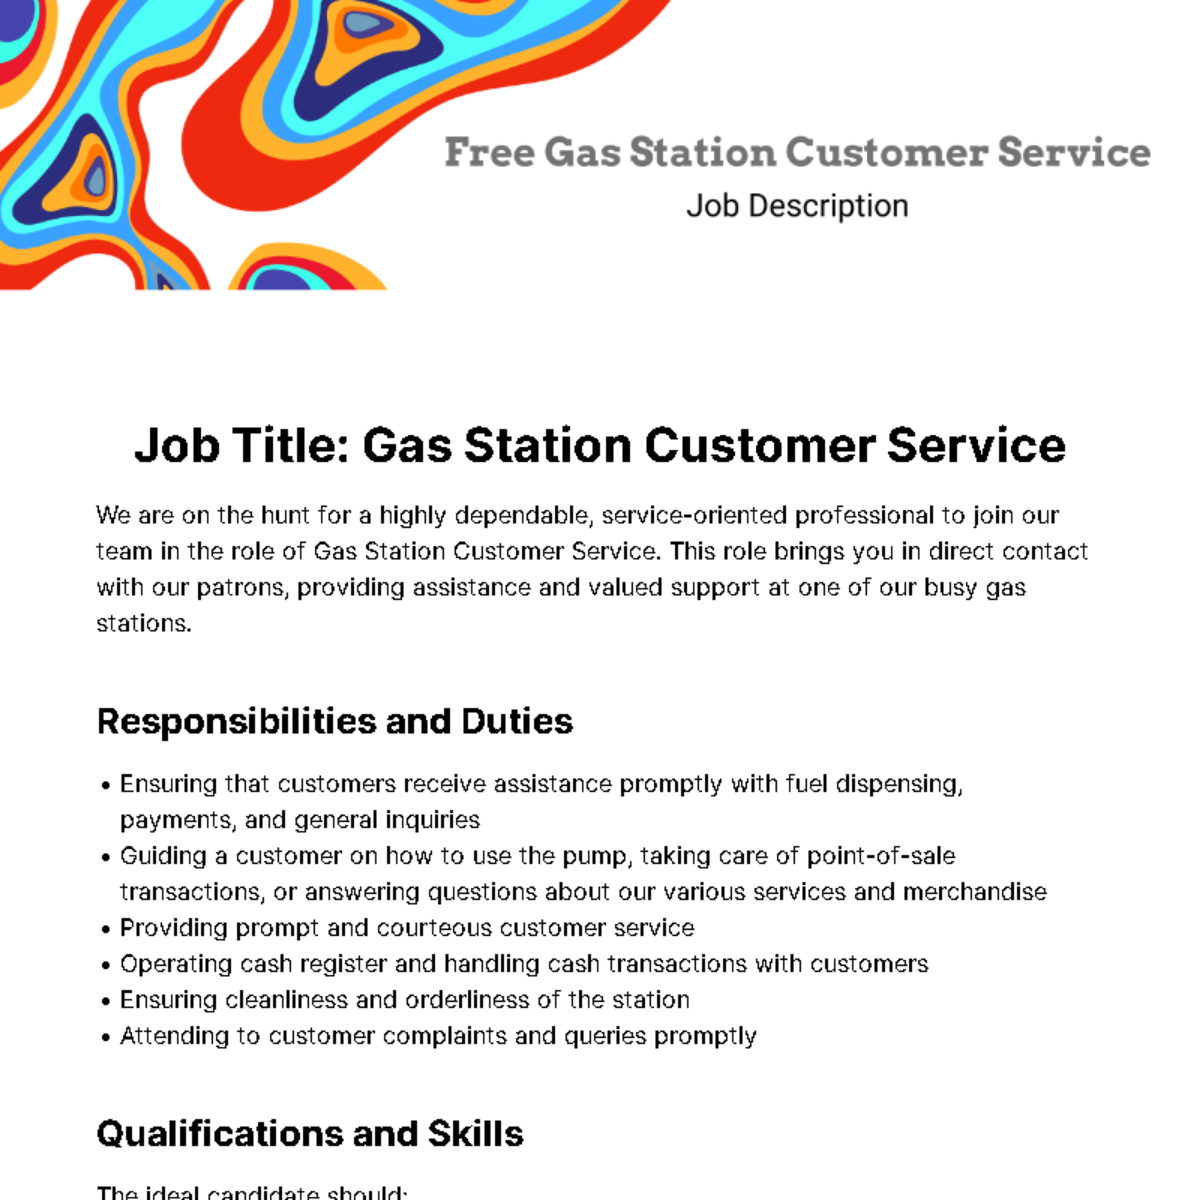 Free Gas Station Customer Service Job Description Template